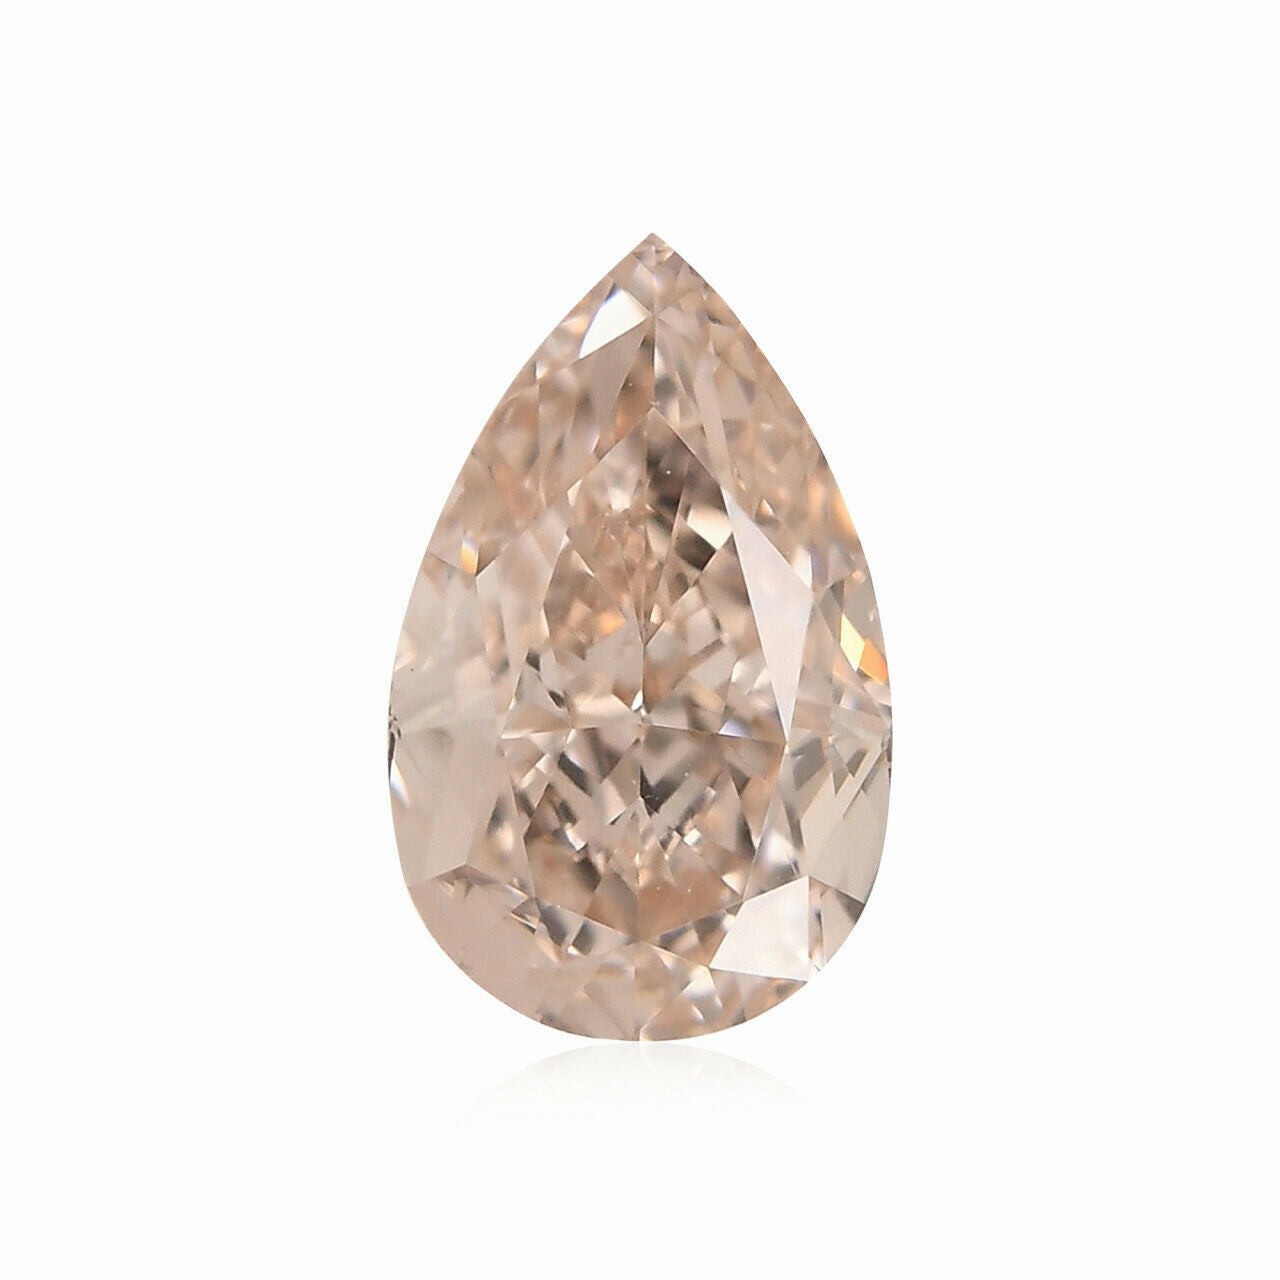 Reserved for John-Diamond Engagement Semi Mount Ring 14K Rose Gold Setting Pear 6.91 x 4.31 x 3.08mm